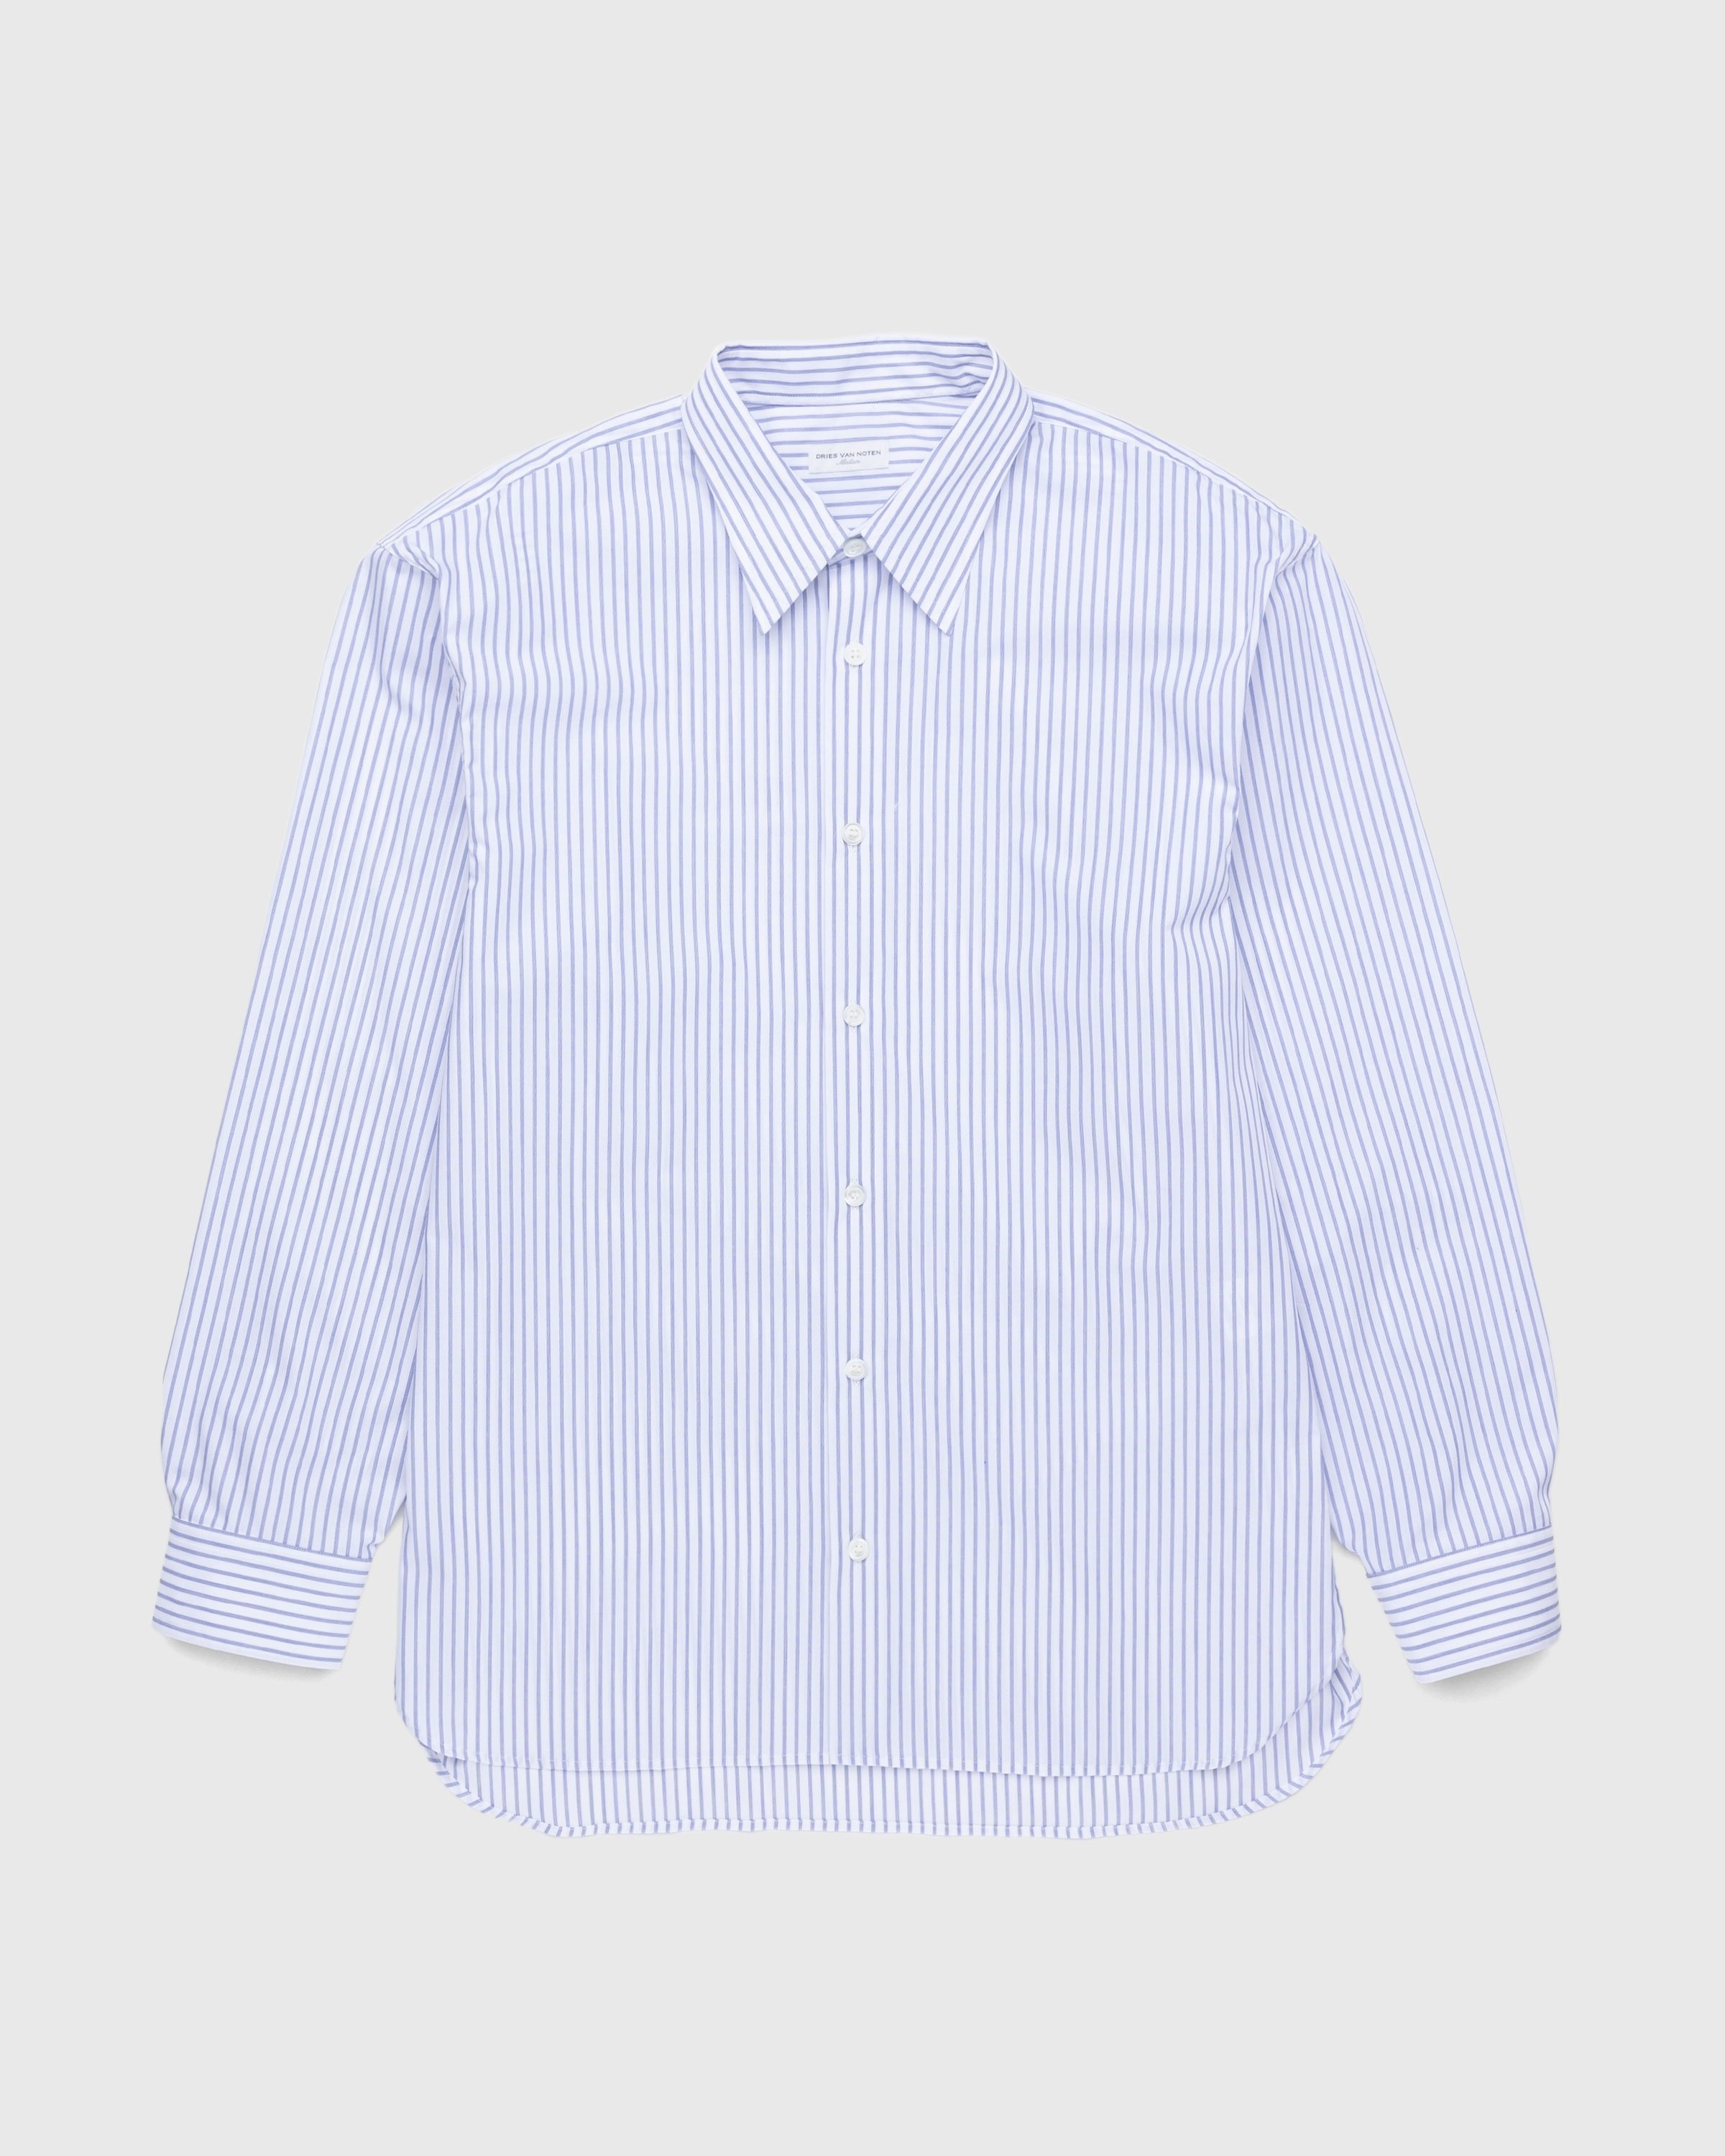 Dries van Noten – Croom Shirt Striped White - Longsleeve Shirts - White - Image 1